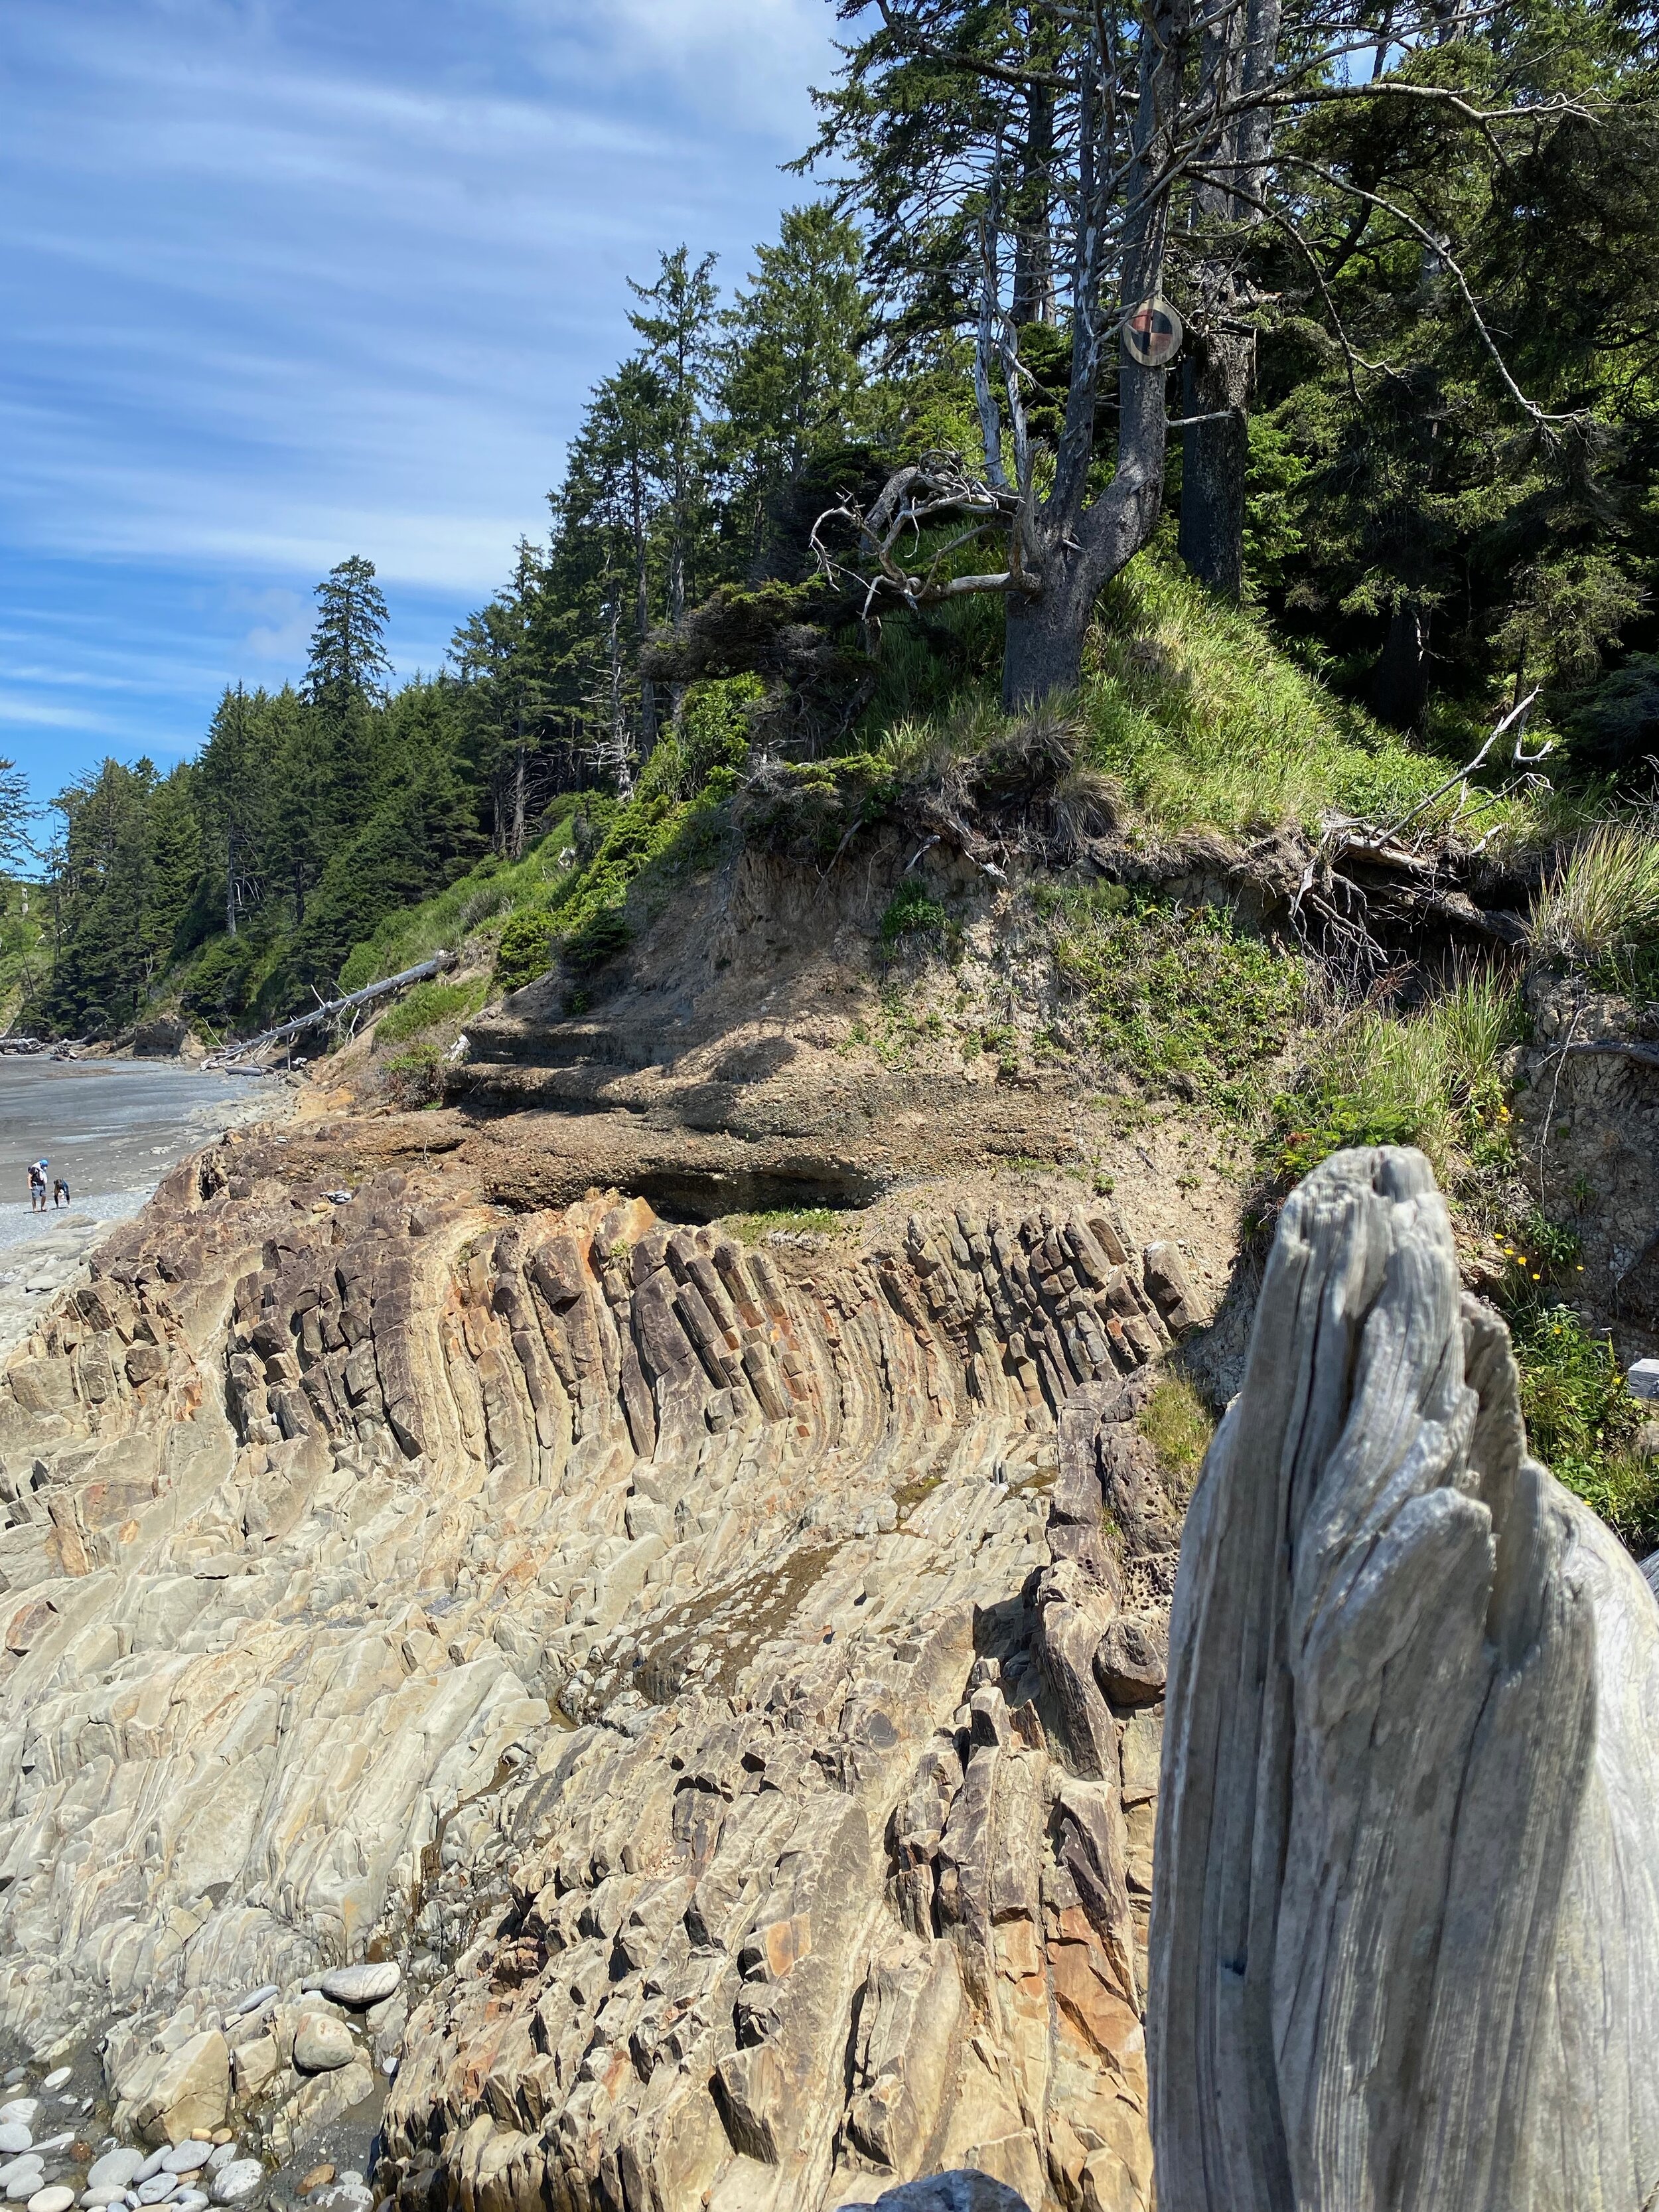 The vertical tilted rocks of Beach 4.  Photo by Karen Boudreaux, June 16, 2021